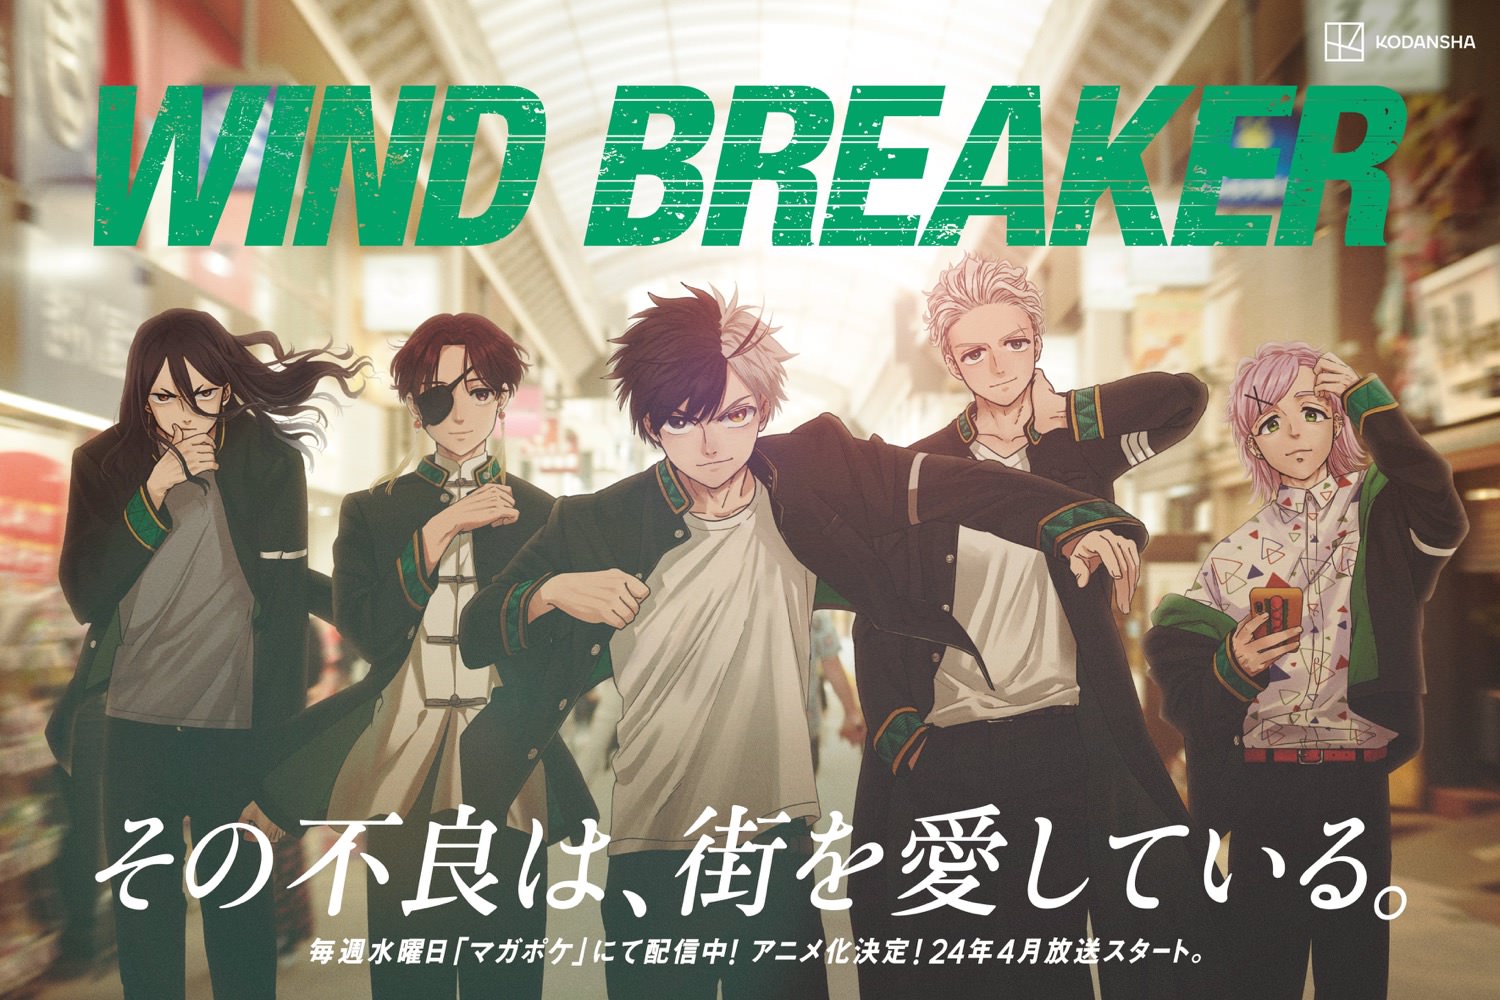 Anime picture code: breaker 1280x905 232614 es